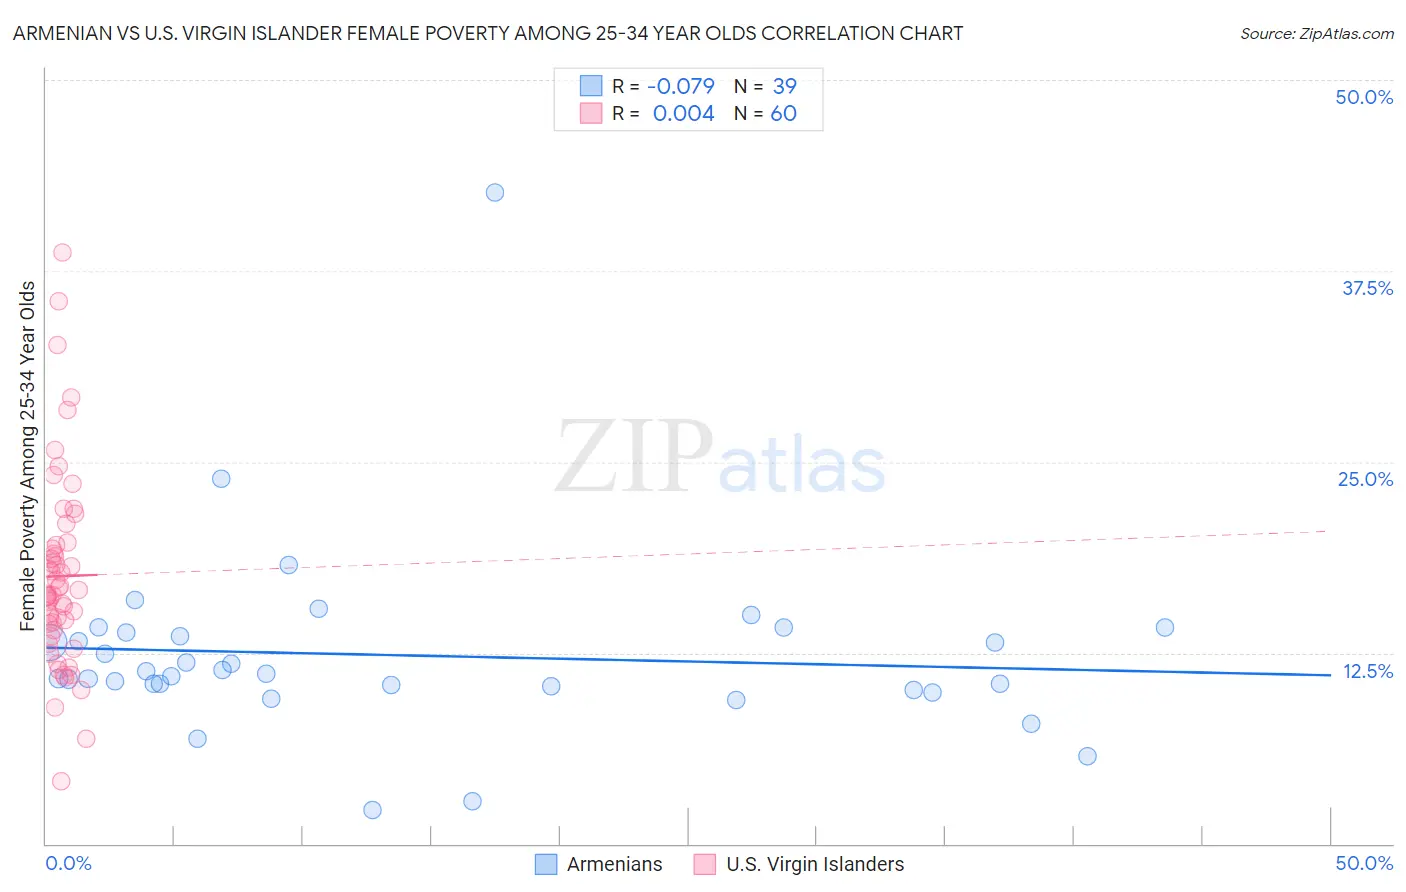 Armenian vs U.S. Virgin Islander Female Poverty Among 25-34 Year Olds